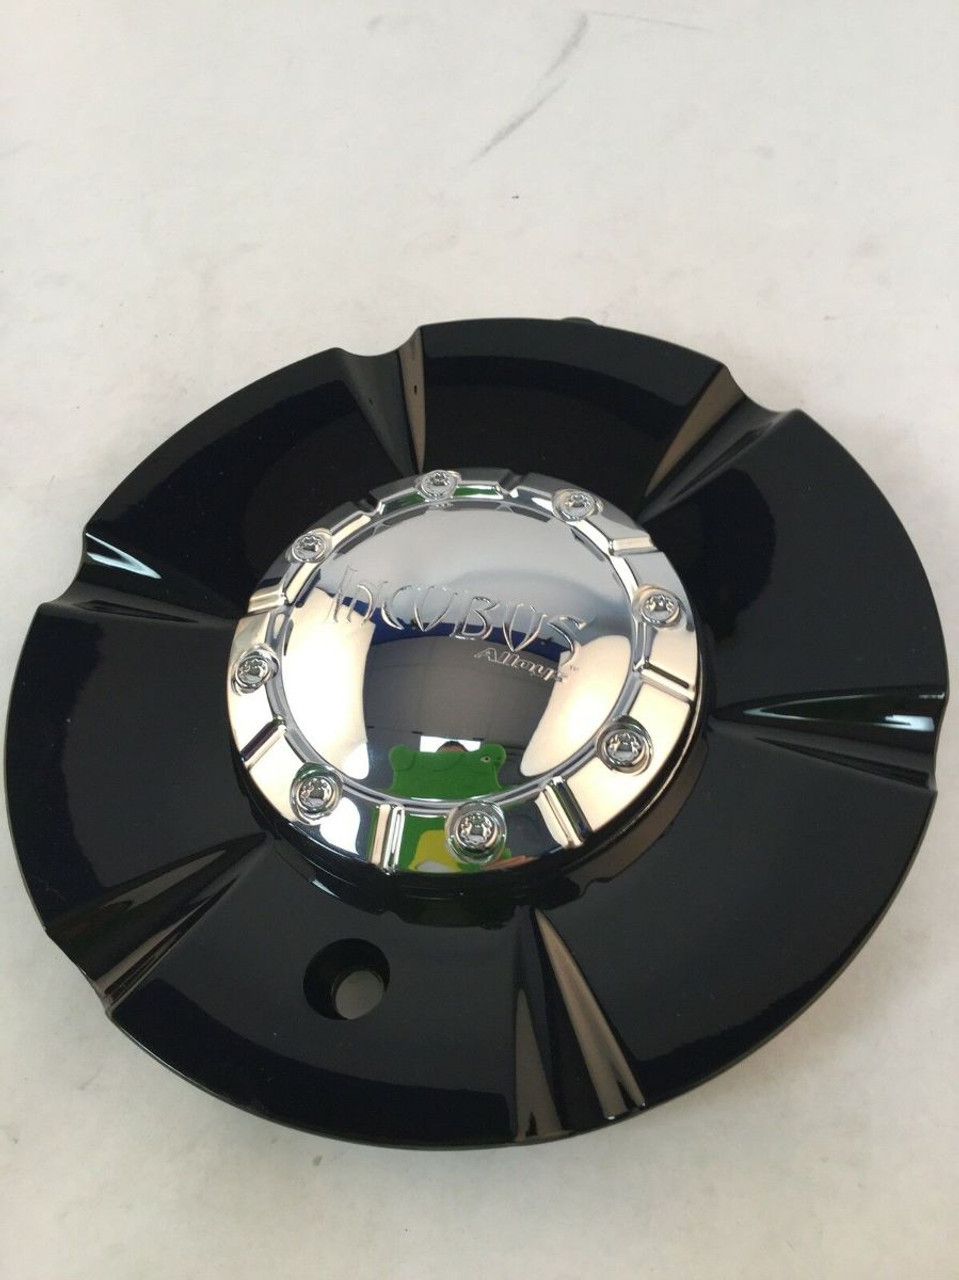 Incubus Boost Aftermarket Wheel Center Hub Cap Black Chrome EMR348-CAP INC43